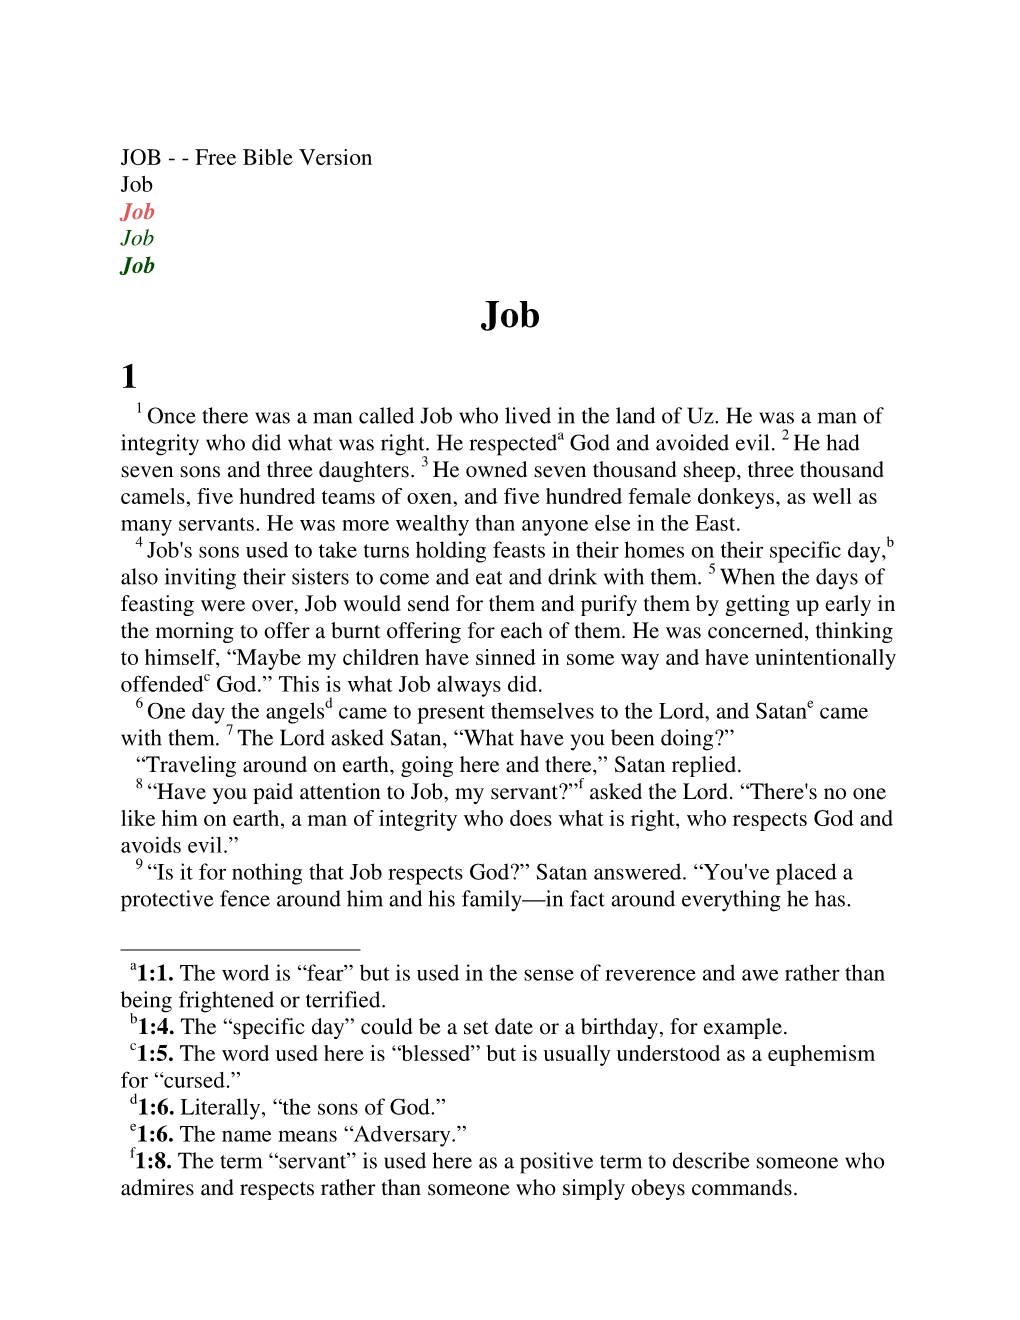 JOB - - Free Bible Version Job Job Job Job Job 1 1 Once There Was a Man Called Job Who Lived in the Land of Uz